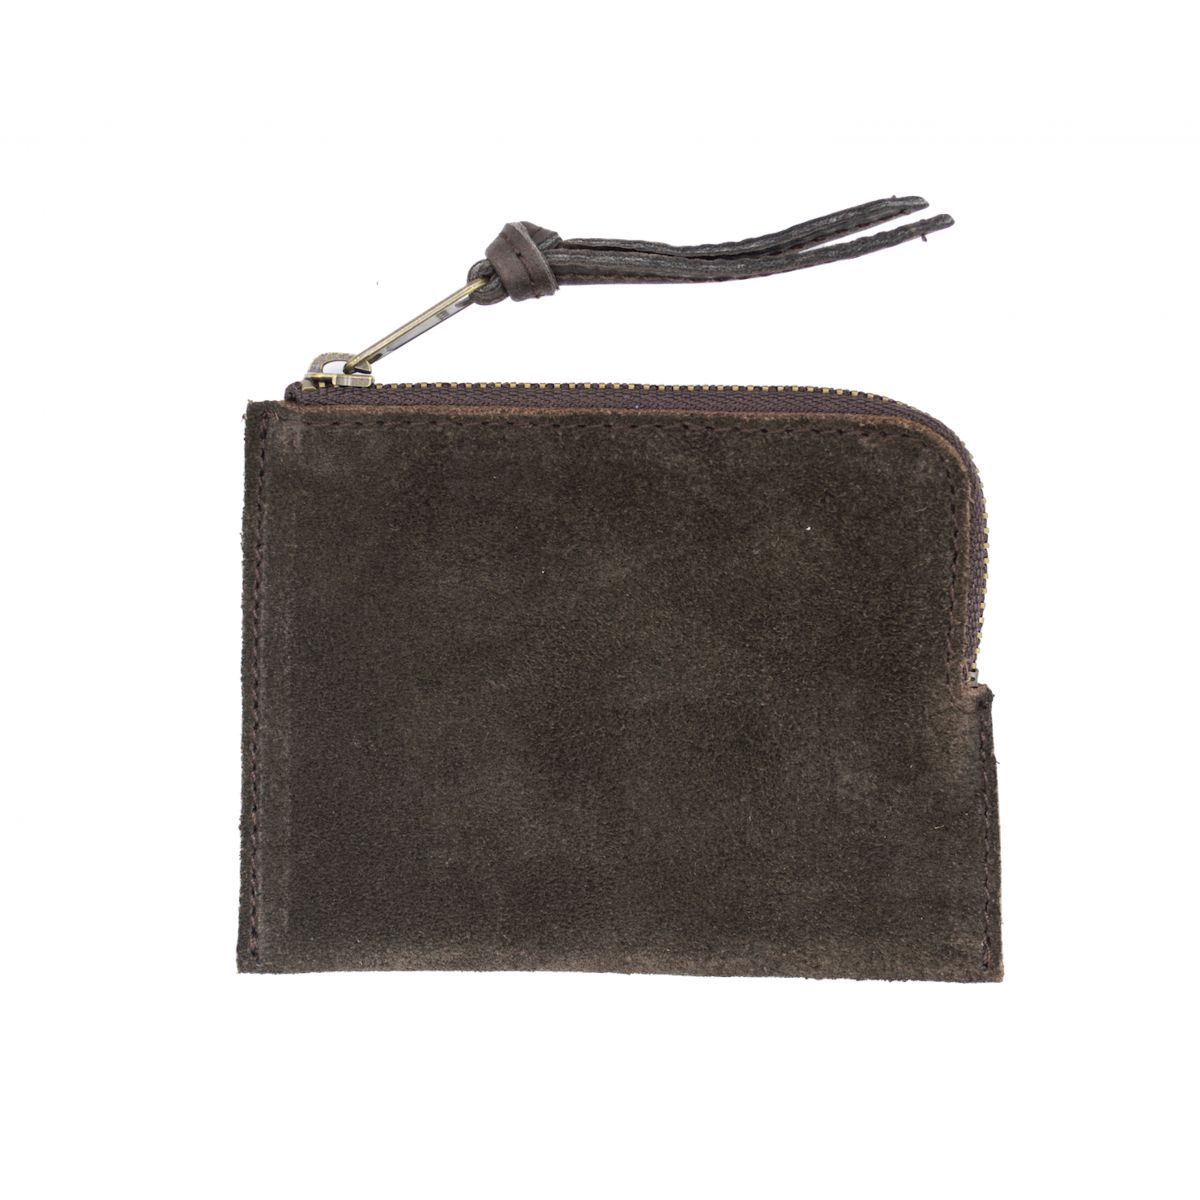 Small suede wallet | A suede small wallet